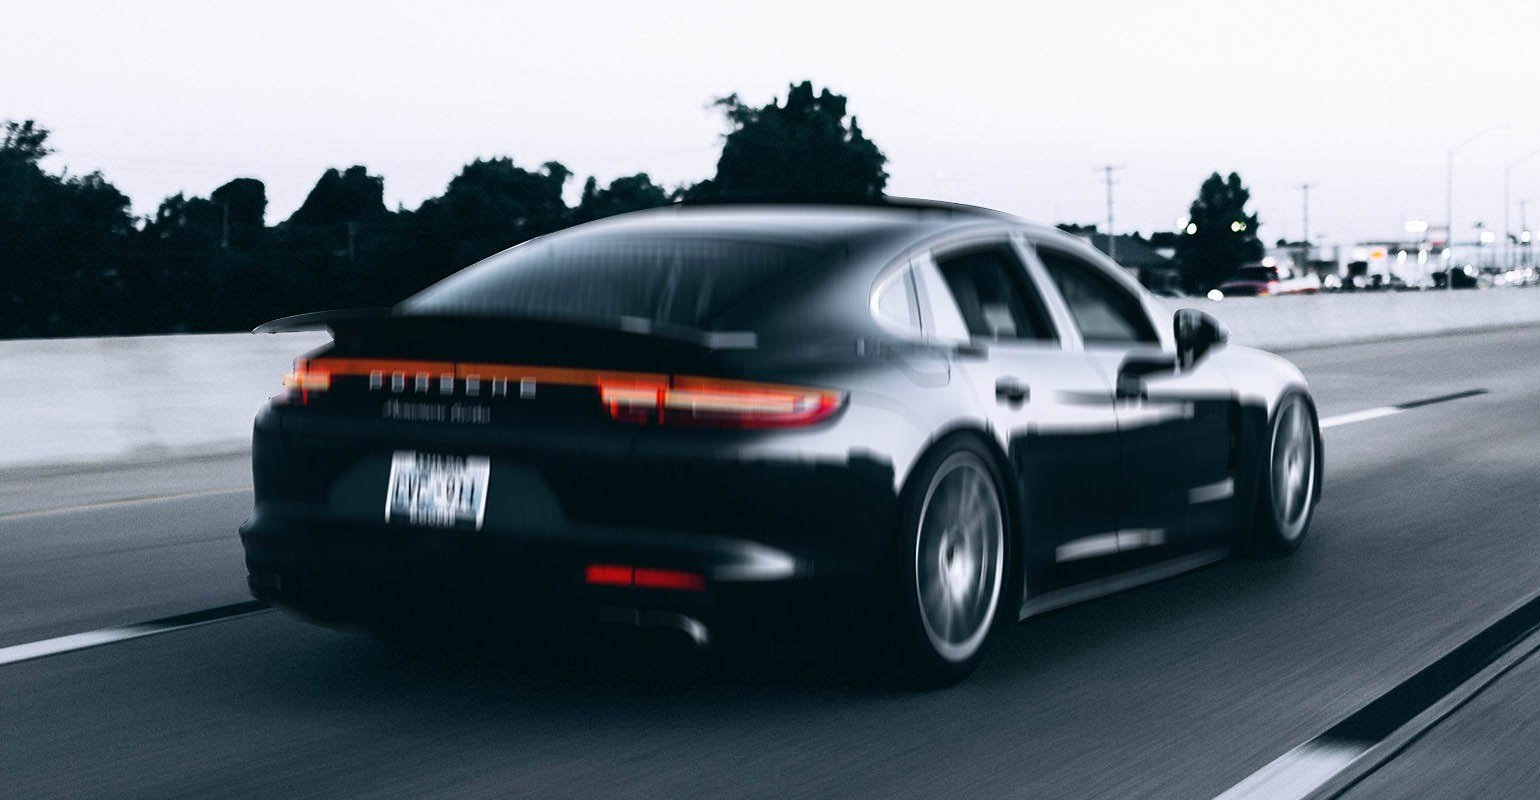 A blurry photo of a running black car